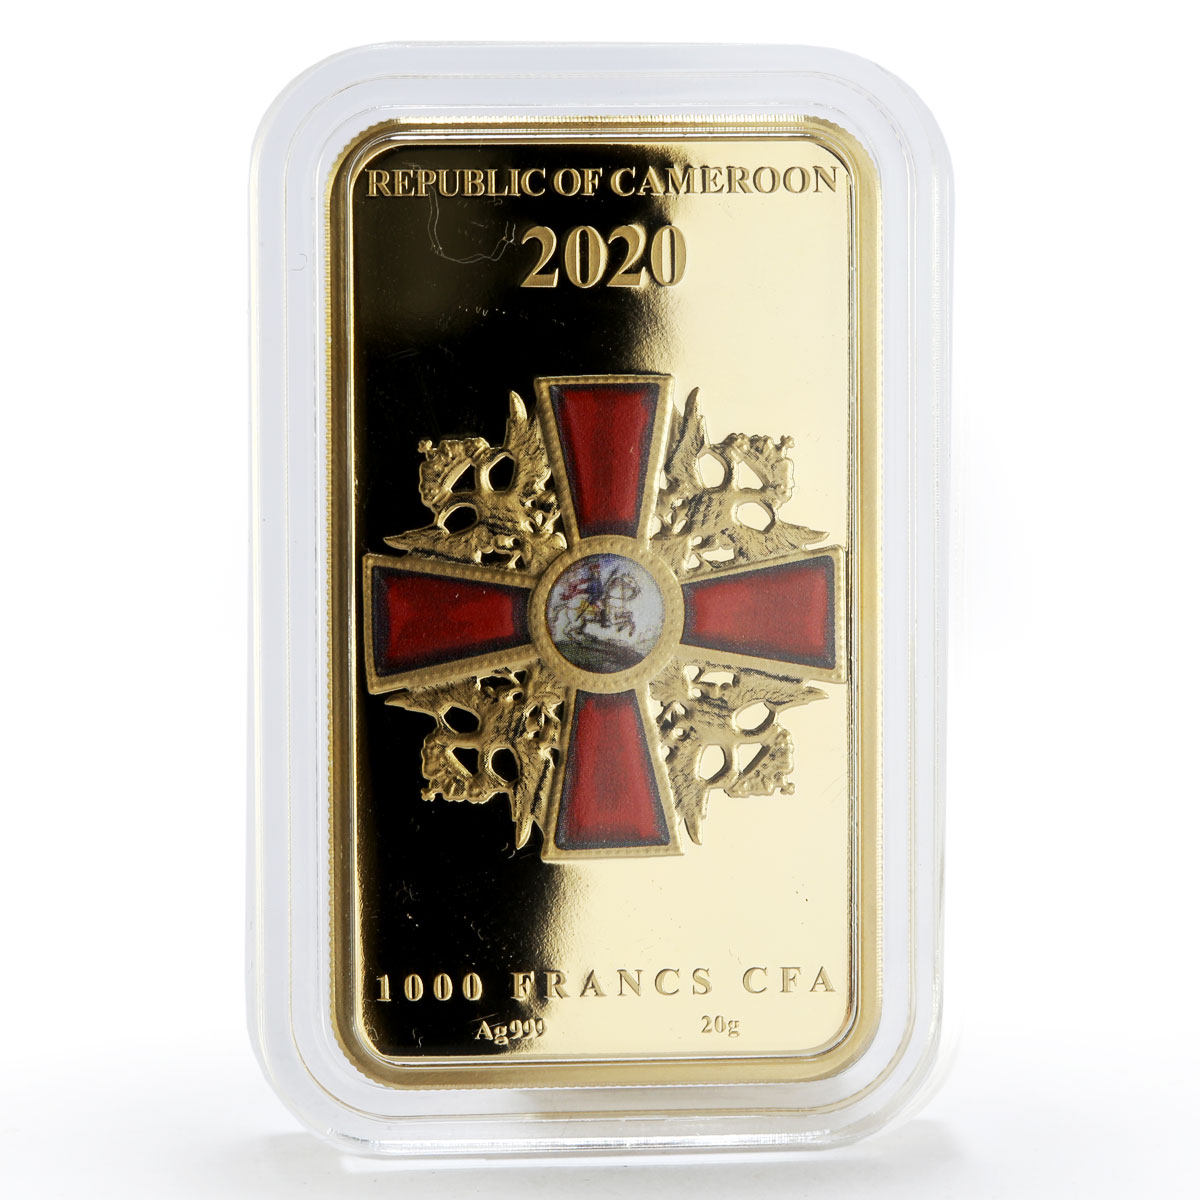 Cameroon 1000 francs Saint Alexander Nevsky colored silver coin 2020